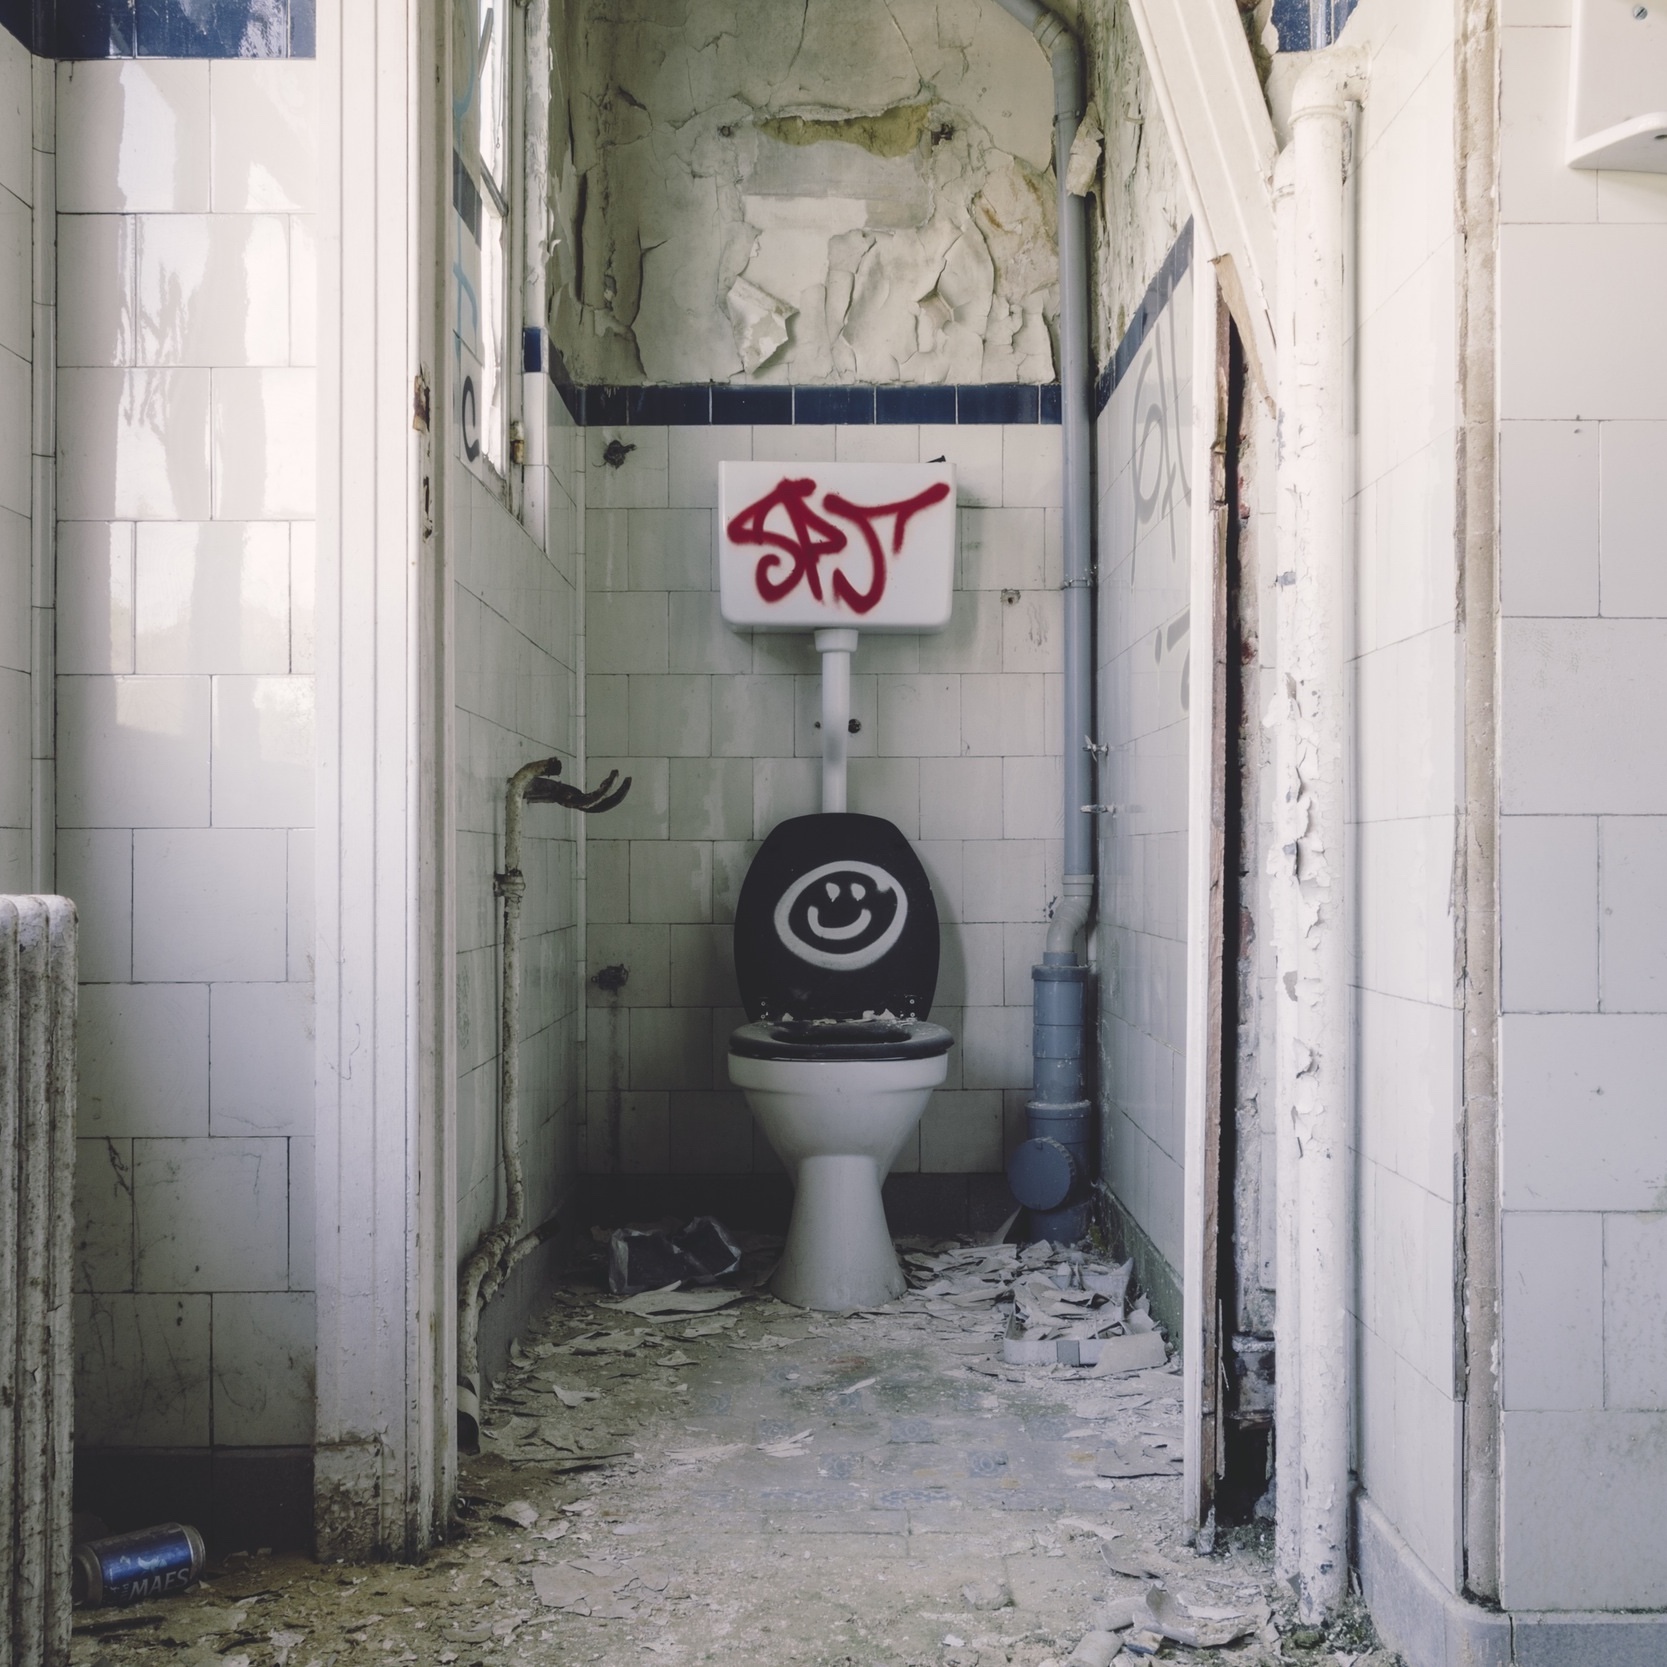 Foto: Toilette in desolatem Zustand